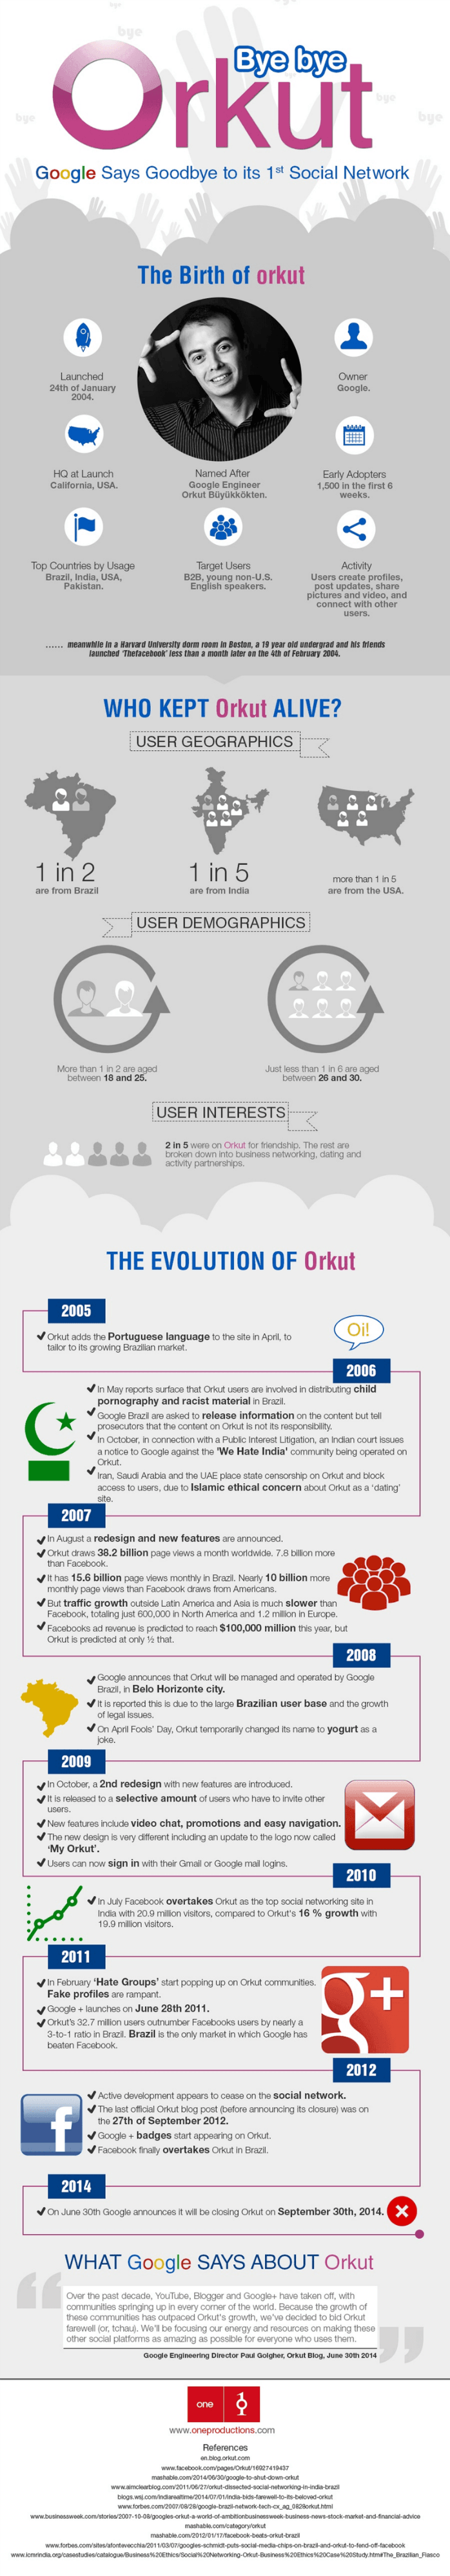 orkut journey